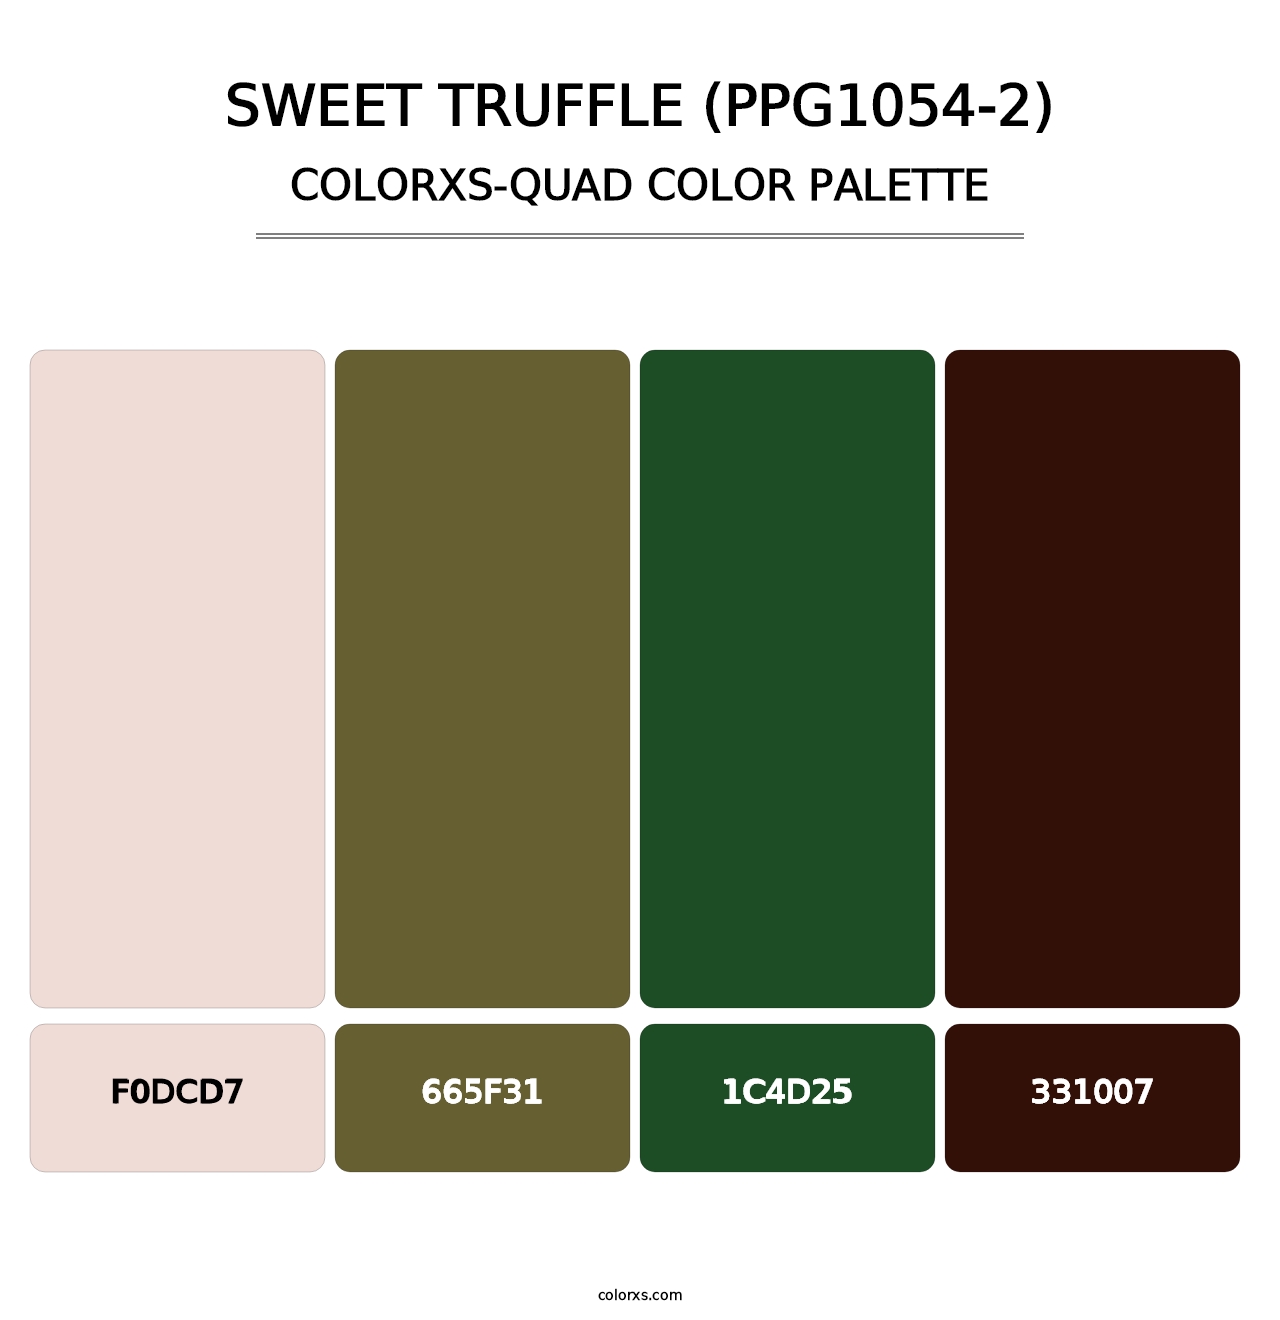 Sweet Truffle (PPG1054-2) - Colorxs Quad Palette